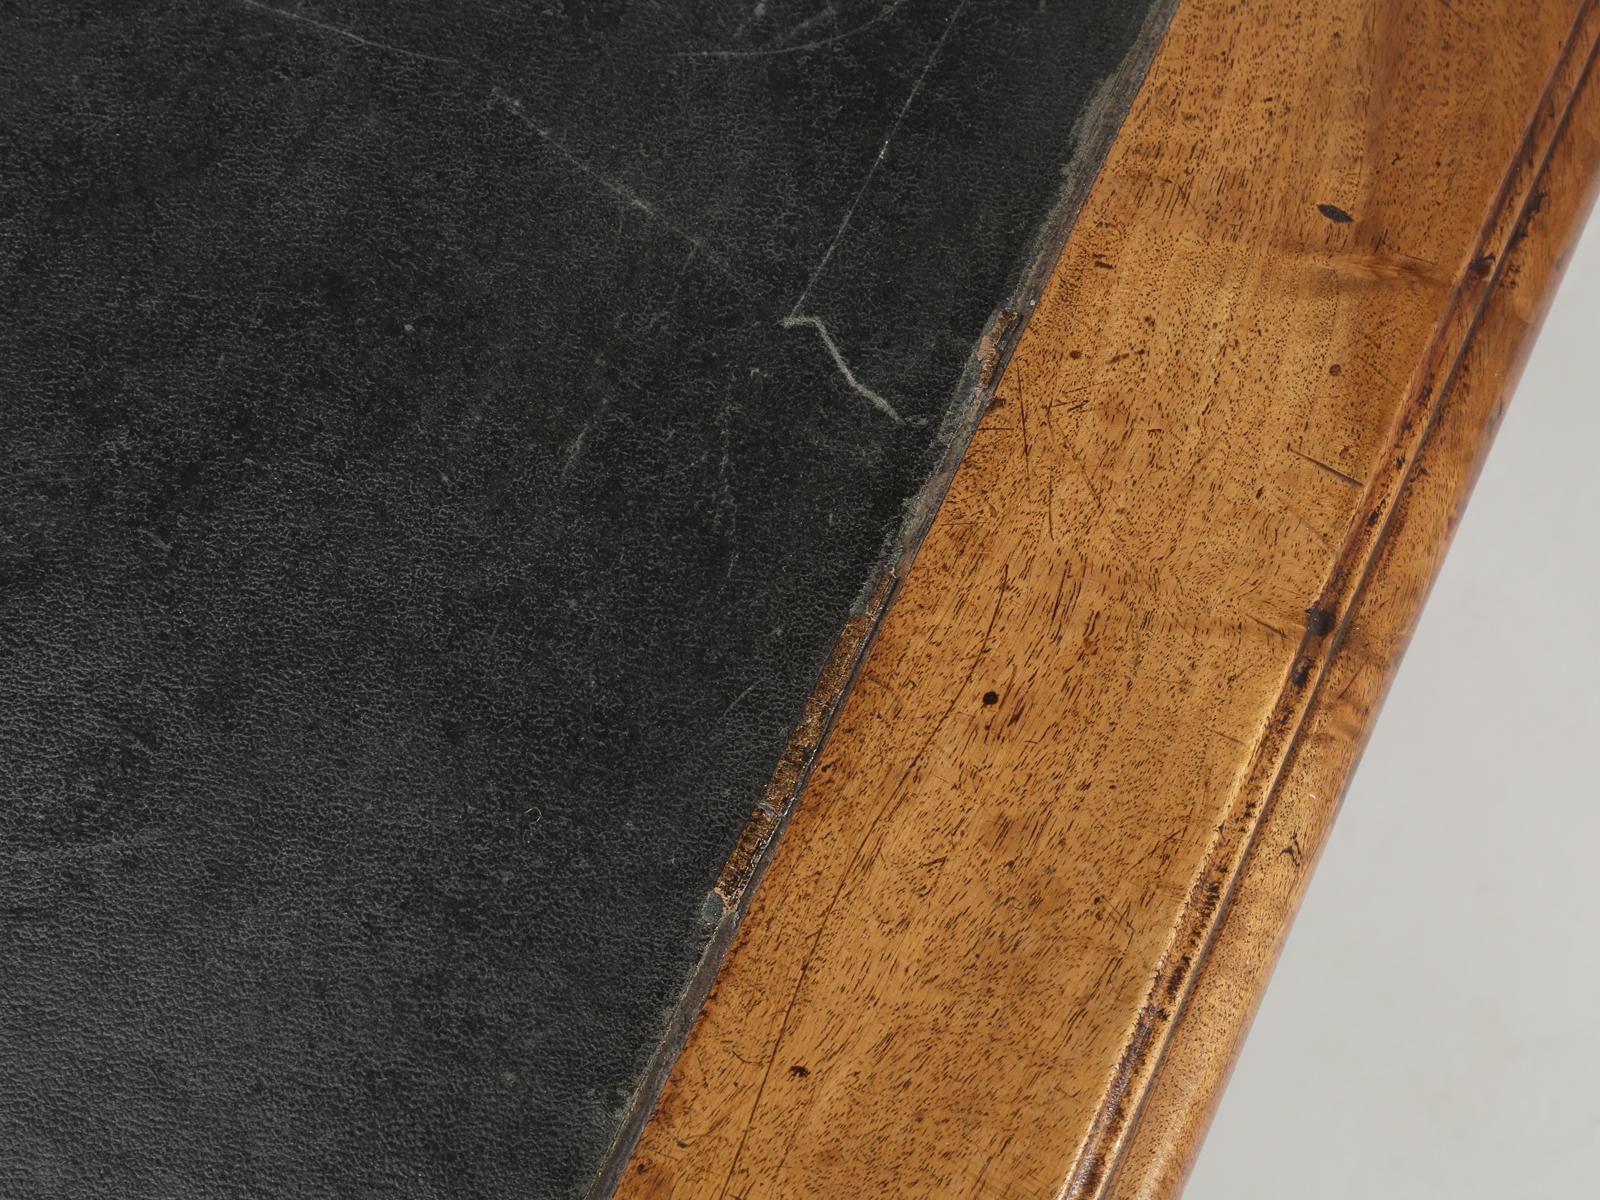 Antique French Louis XIII Style Barley Twist Desk in Solid Walnut Unrestored 1